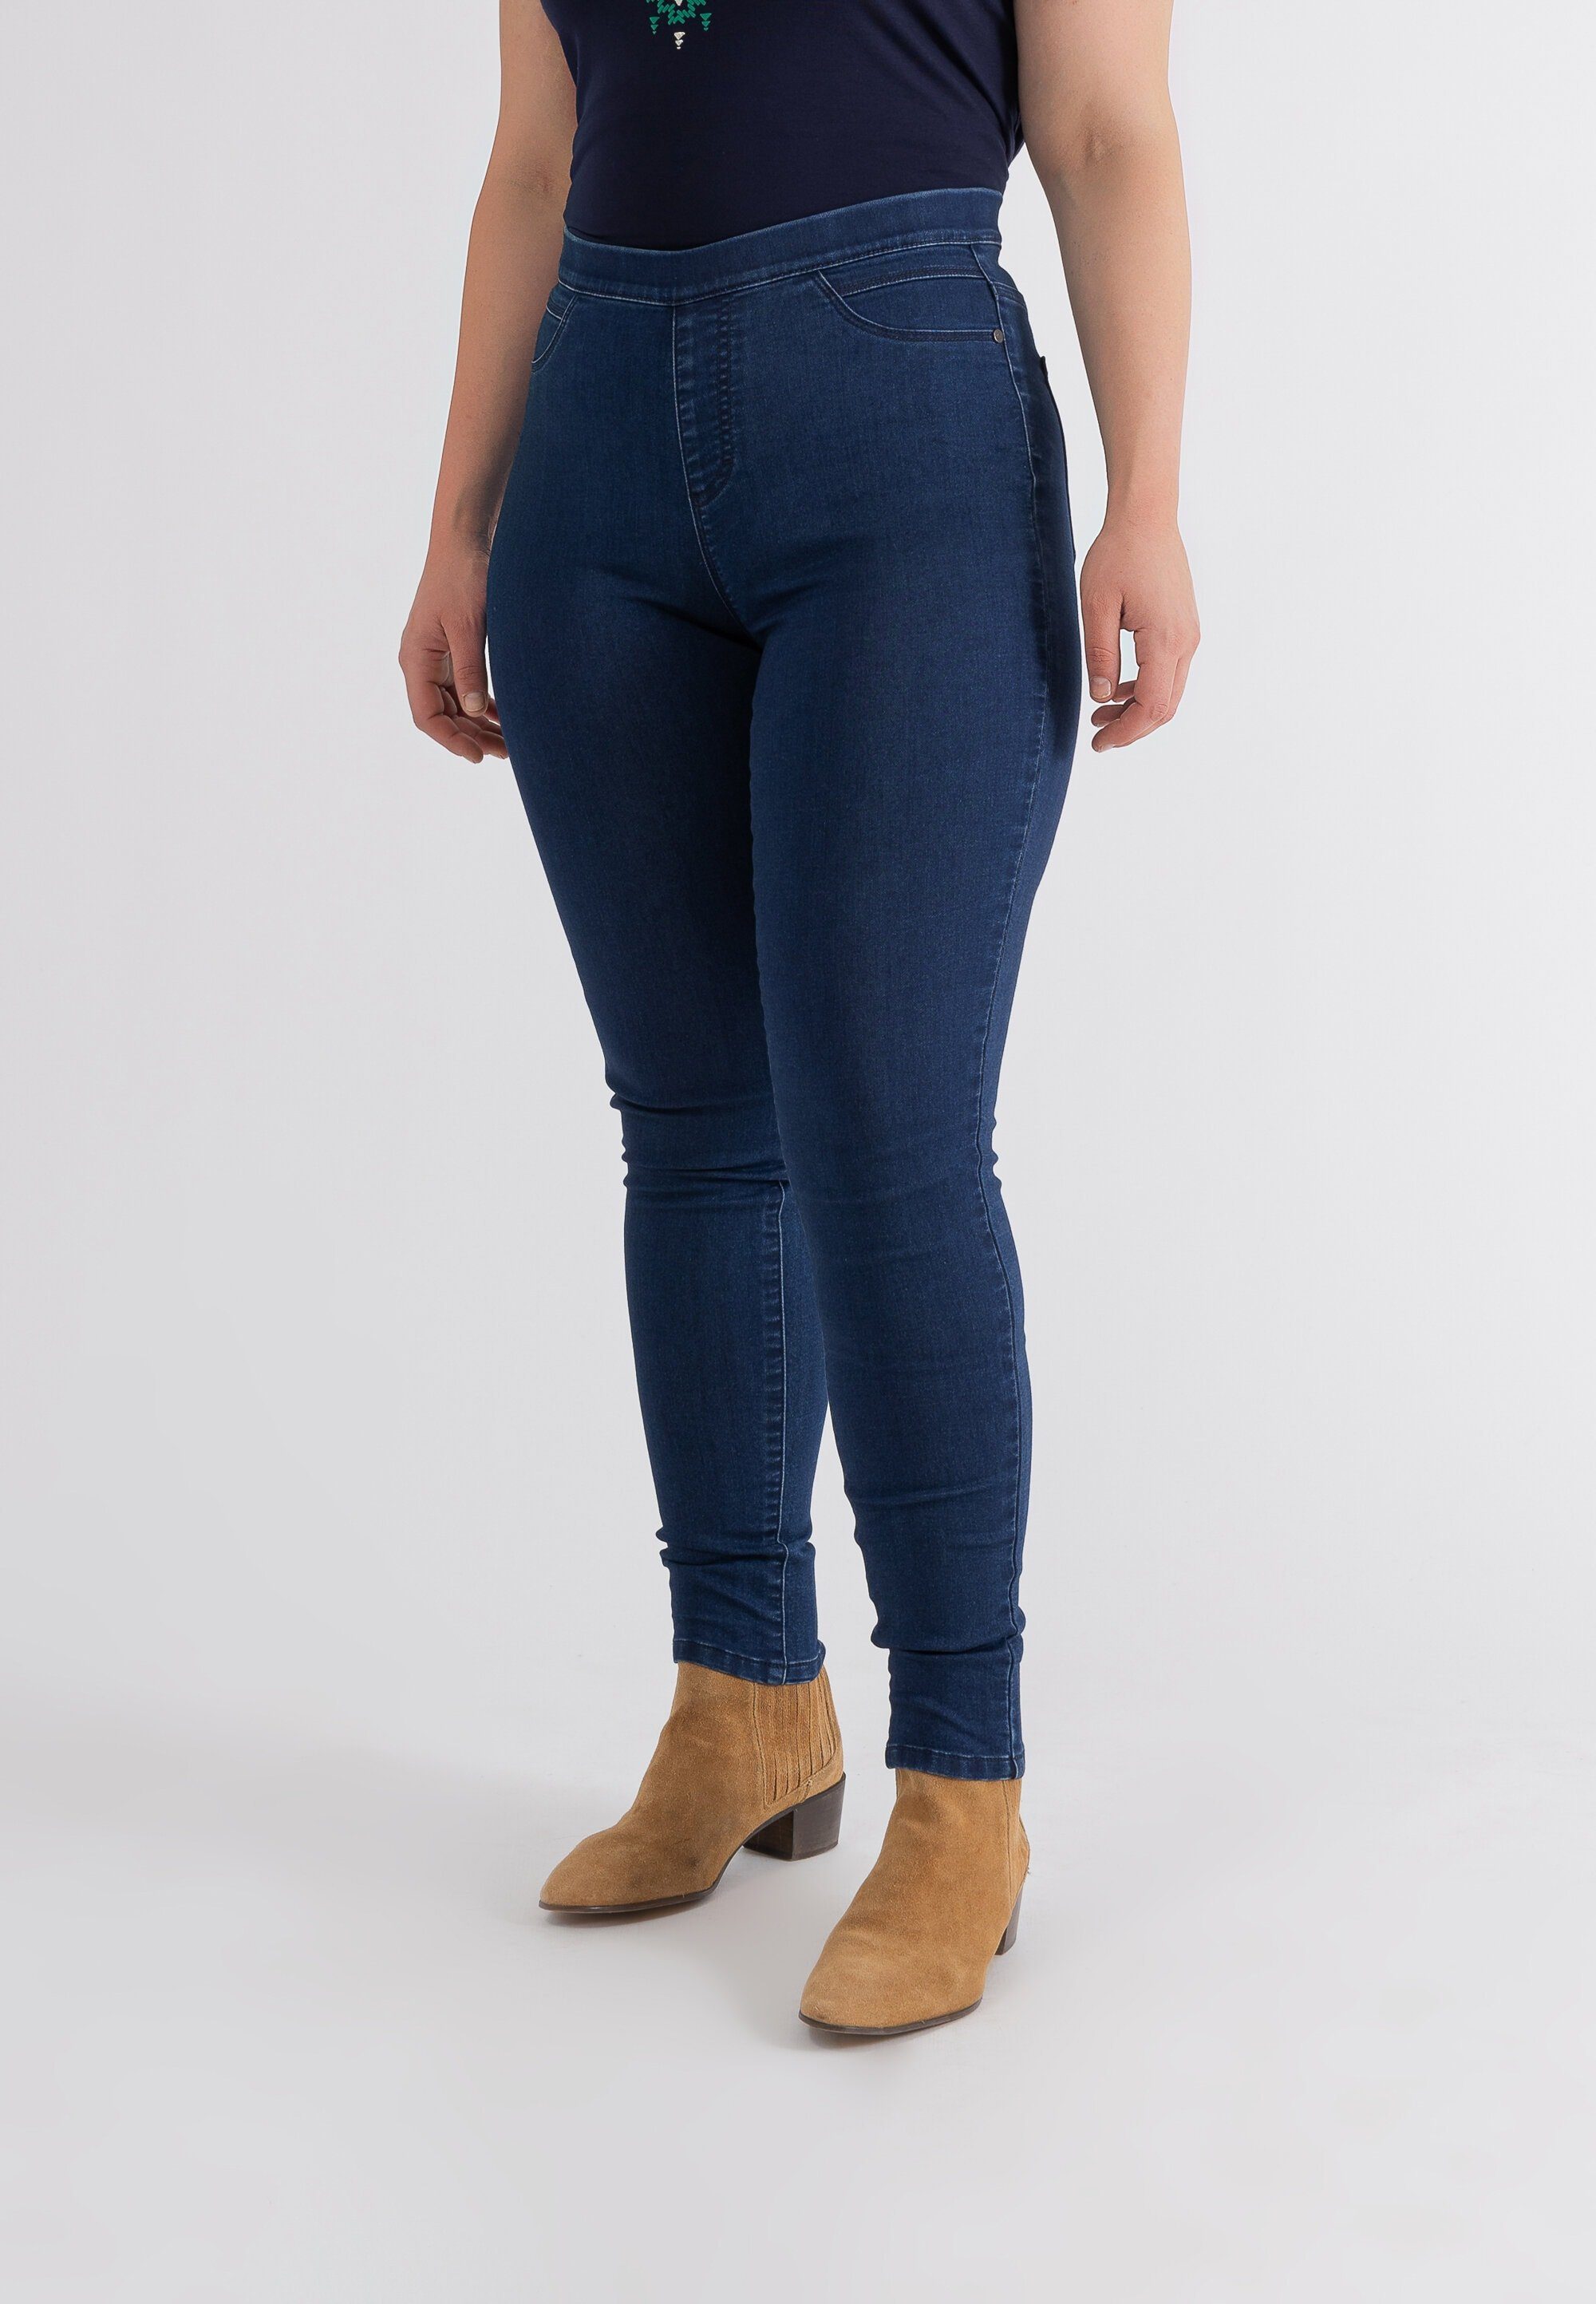 klassischen Jeans blau Design im October Bequeme